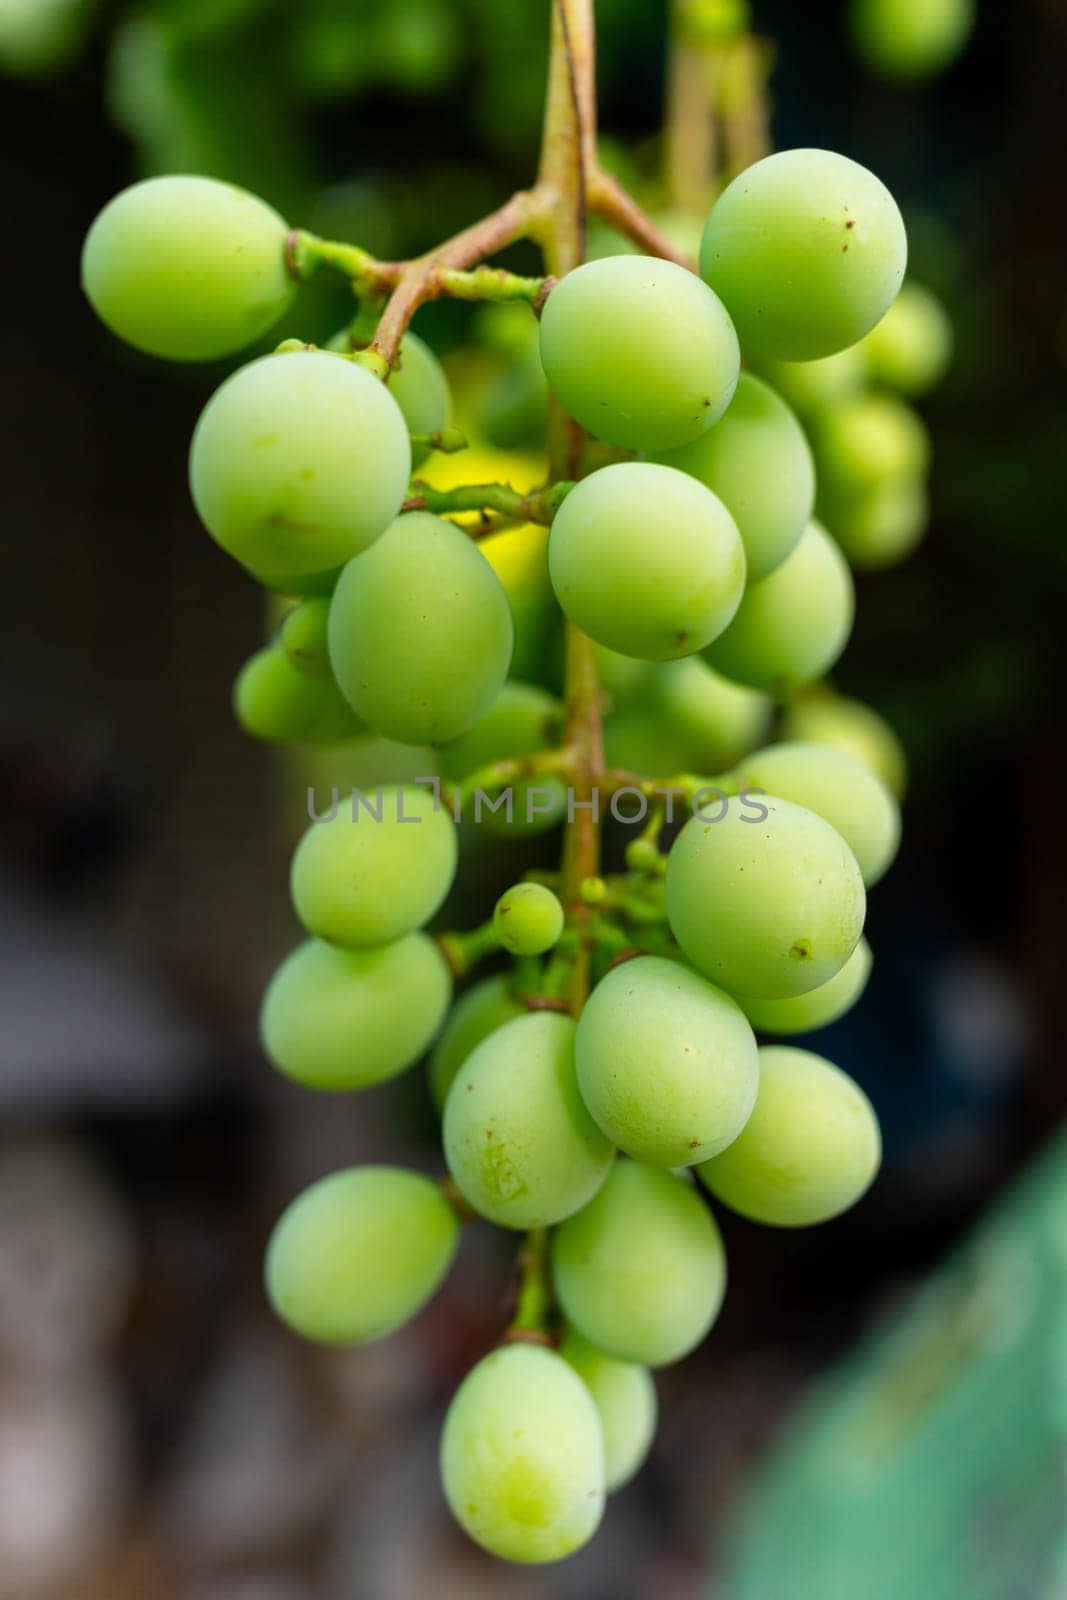 Bunch of green grapes close-up by Serhii_Voroshchuk